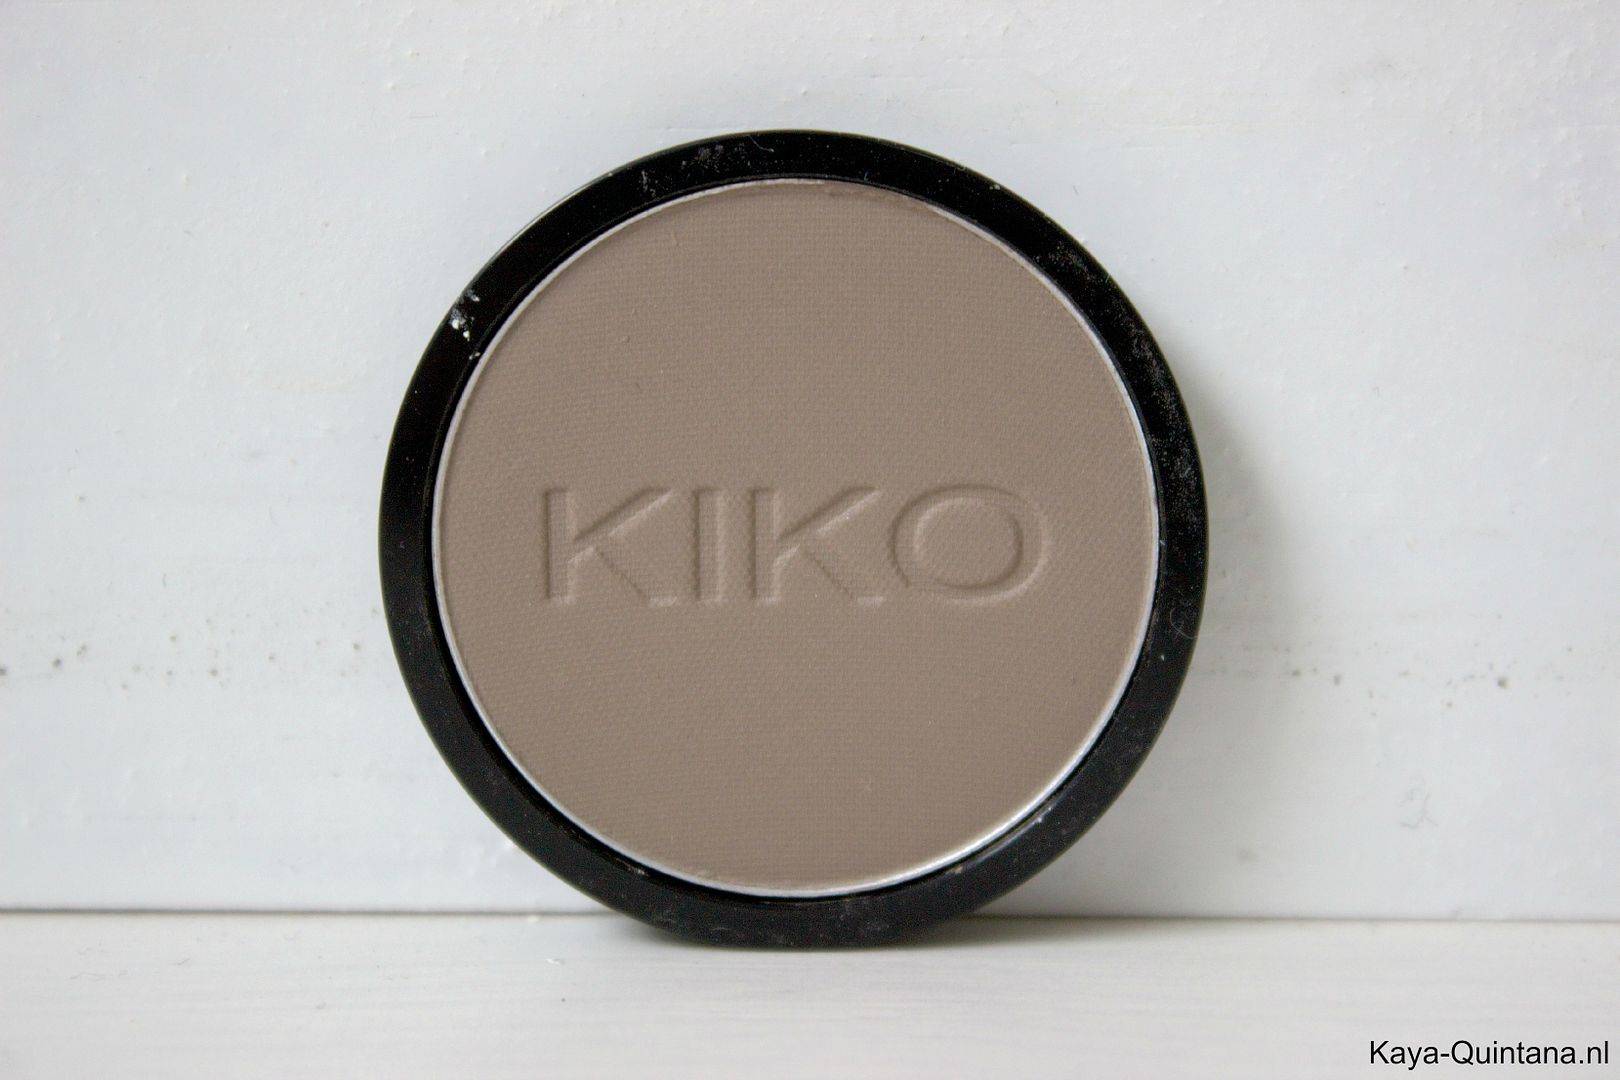 kiko eyeshadow 239 mat gray taupe